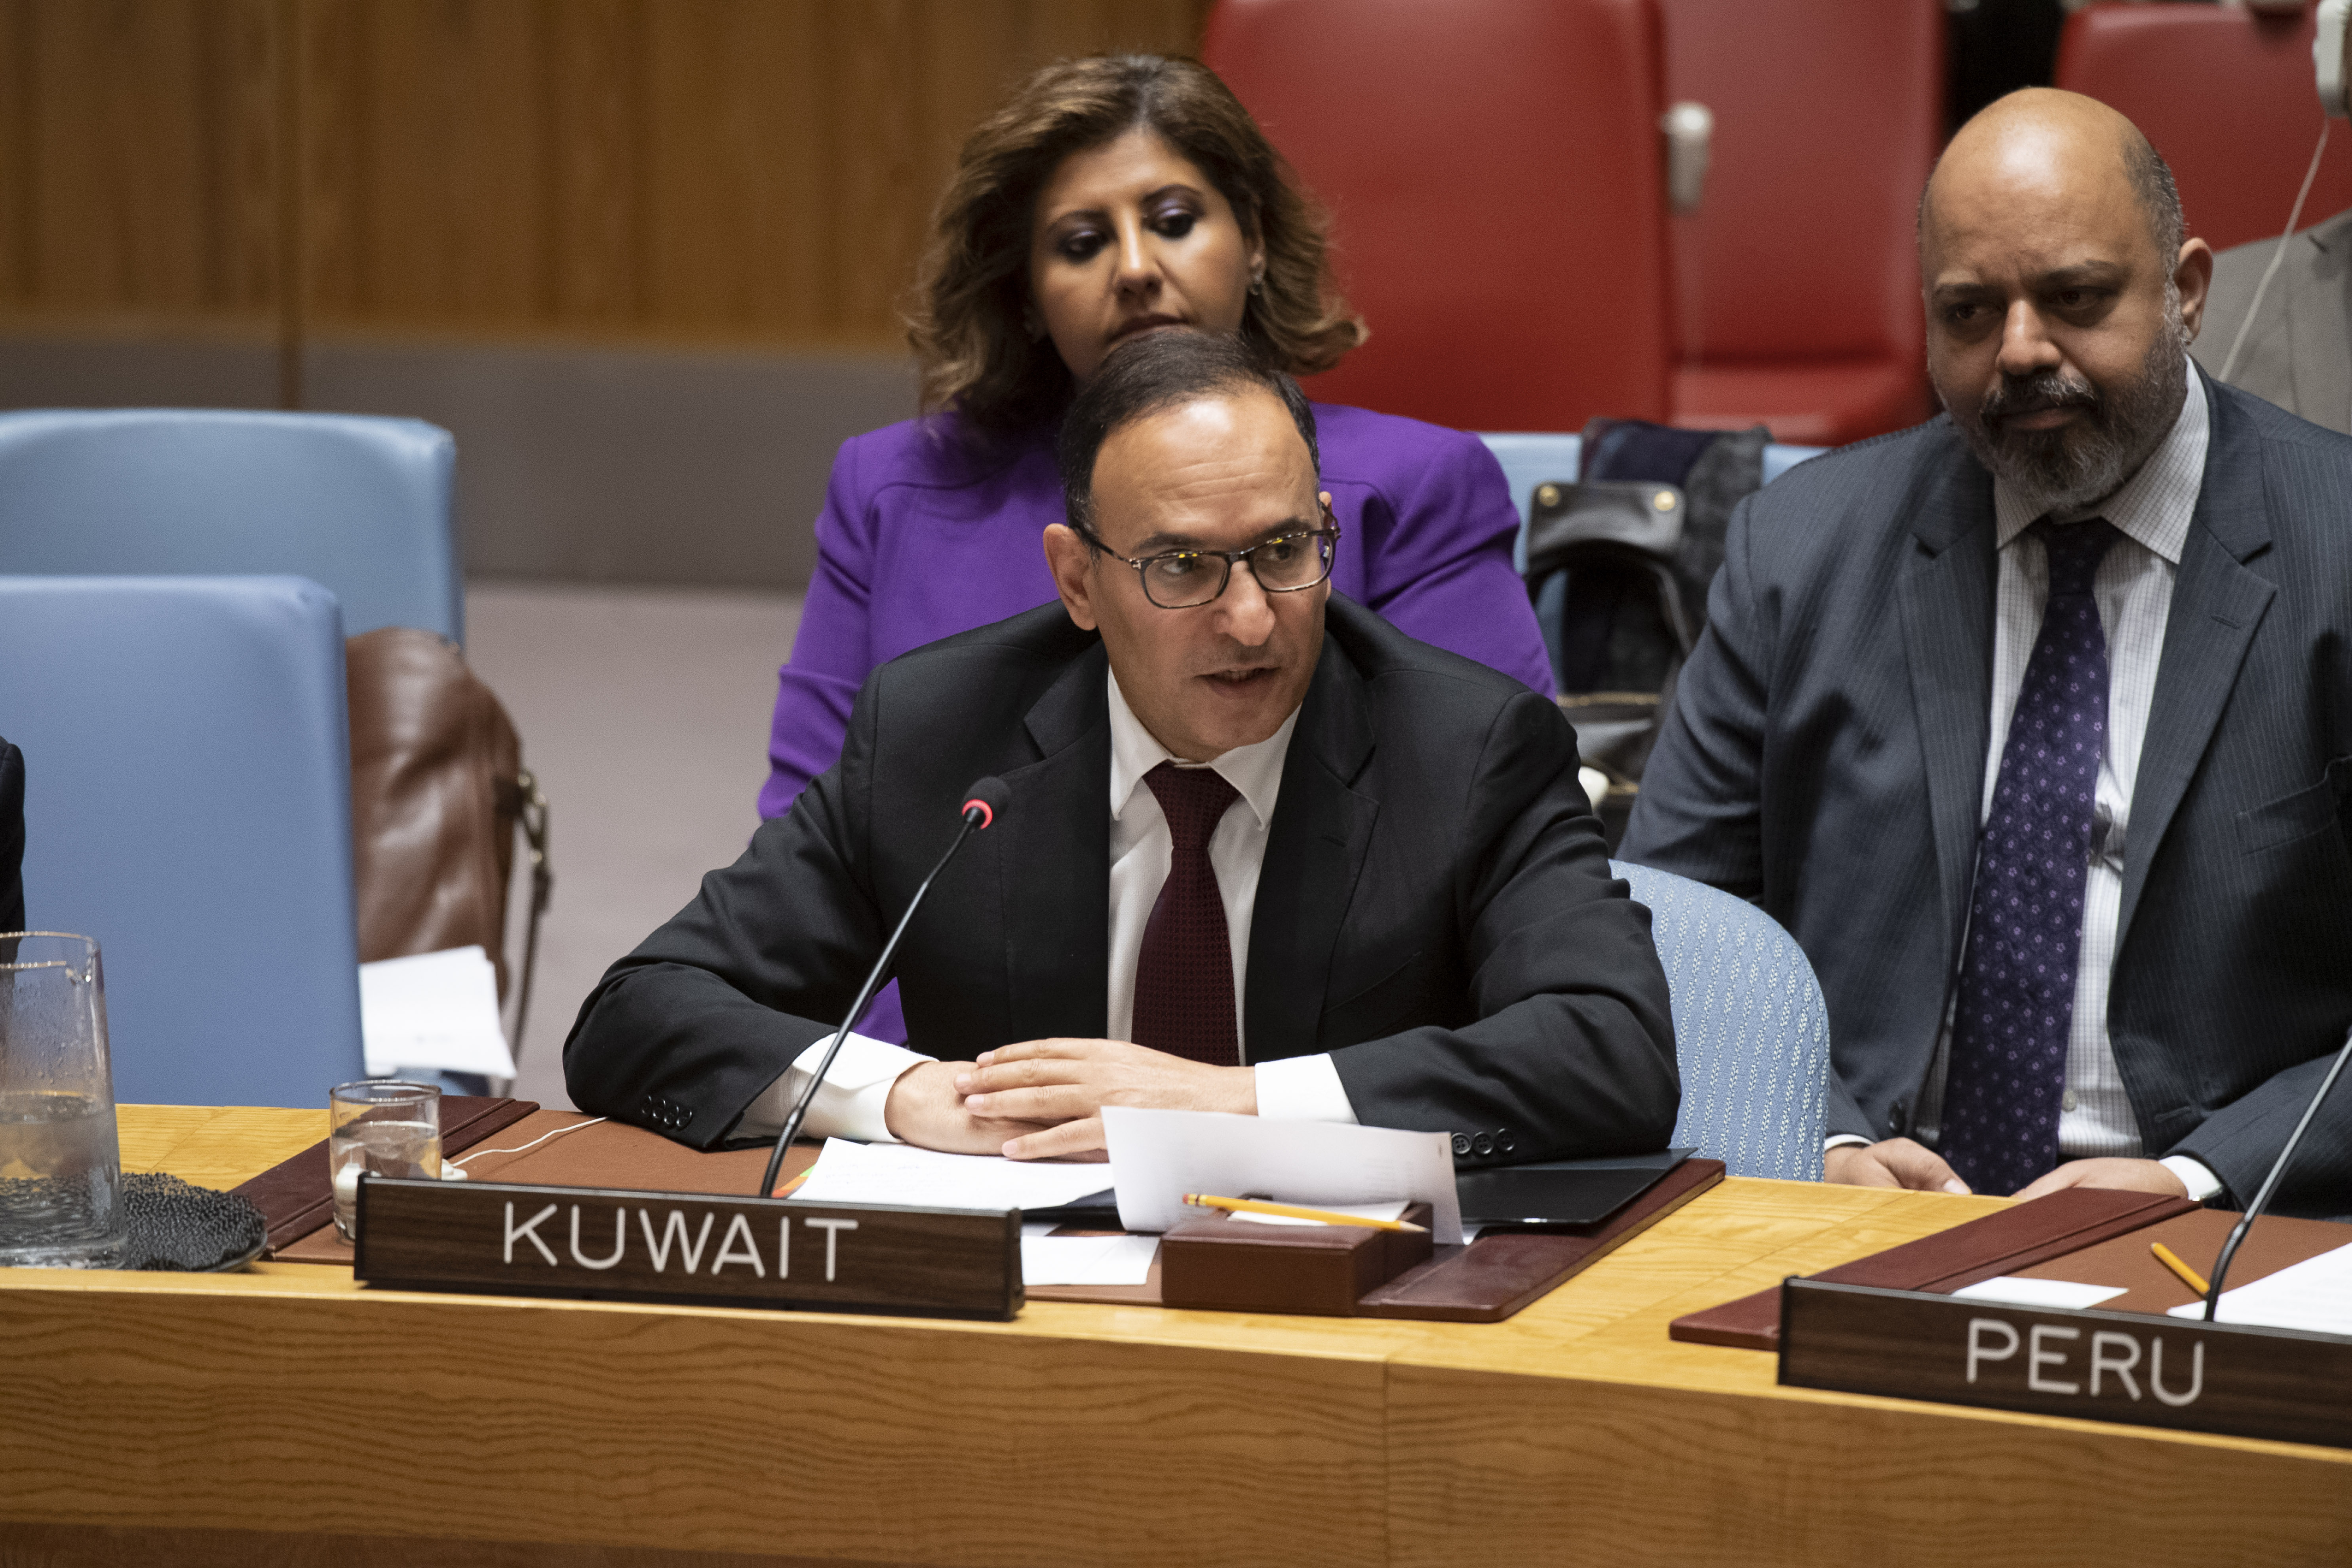 Kuwait's Permanent Representative to the UN Ambassador Mansour Al-Otaibi